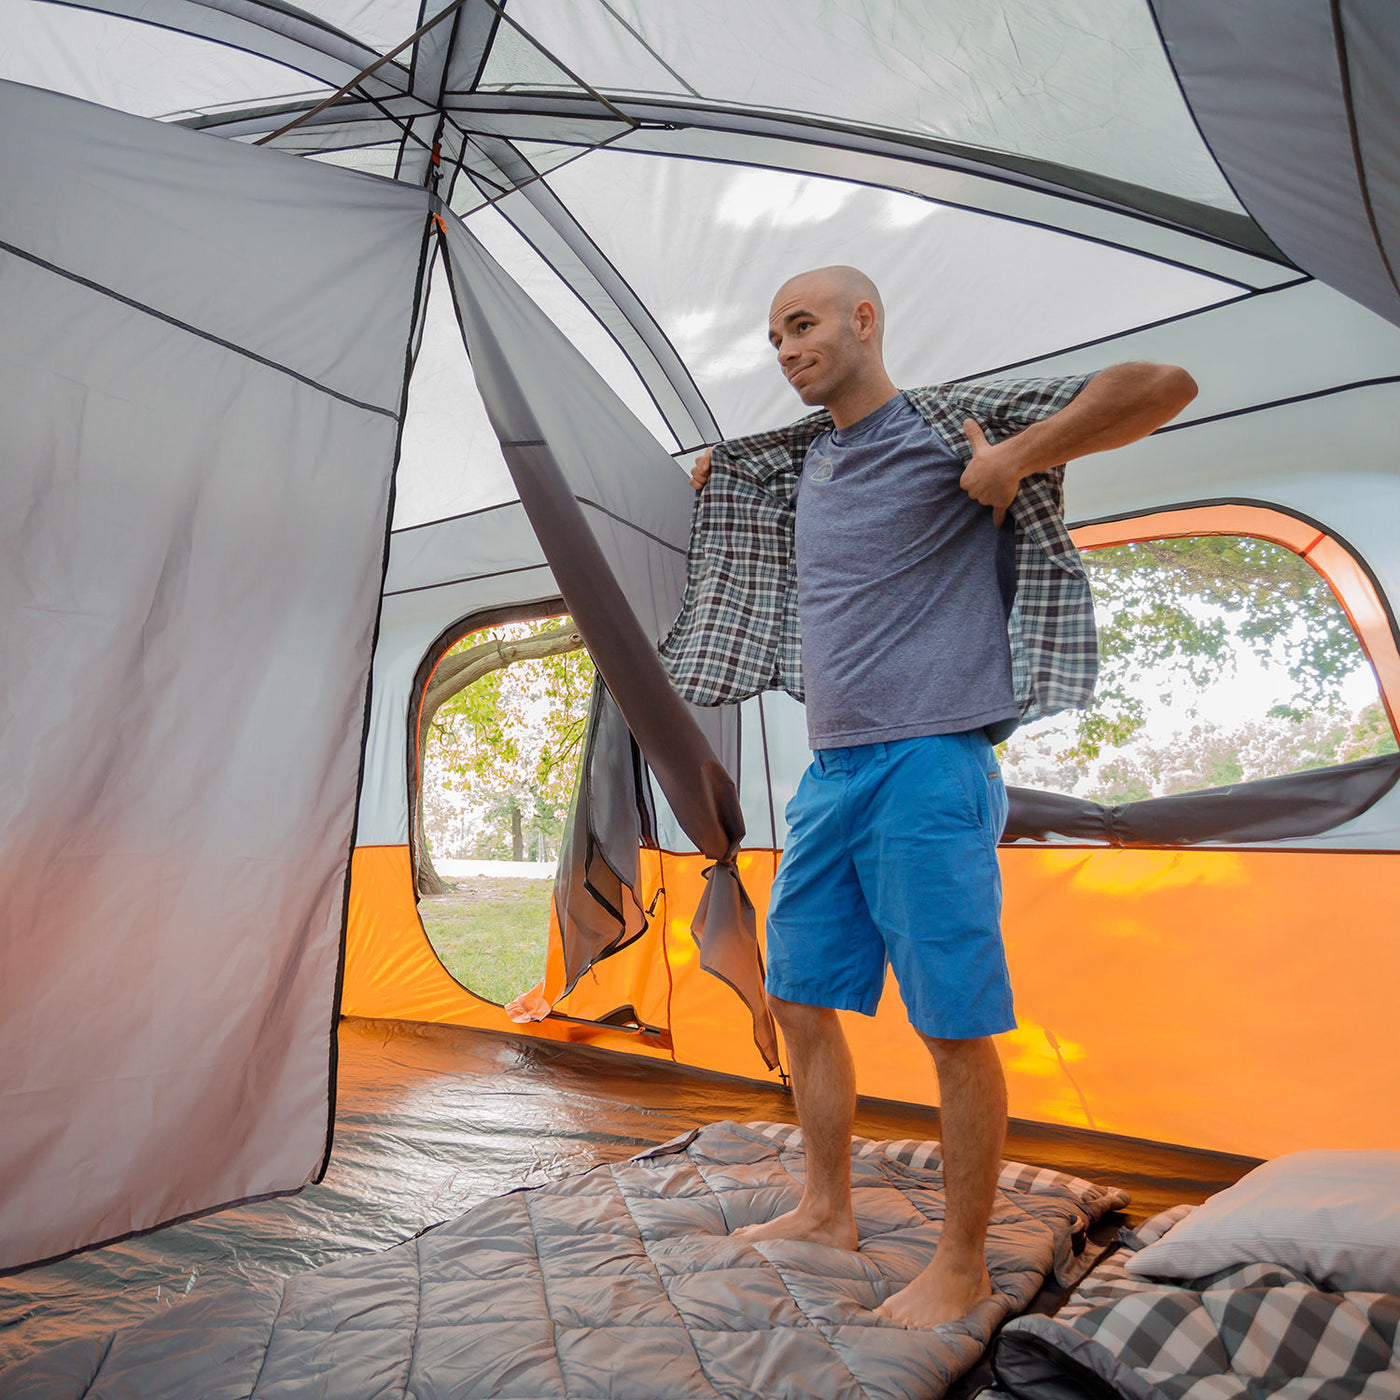 CORE® Equipment 10 Person Straight Wall Cabin Tent Setup 